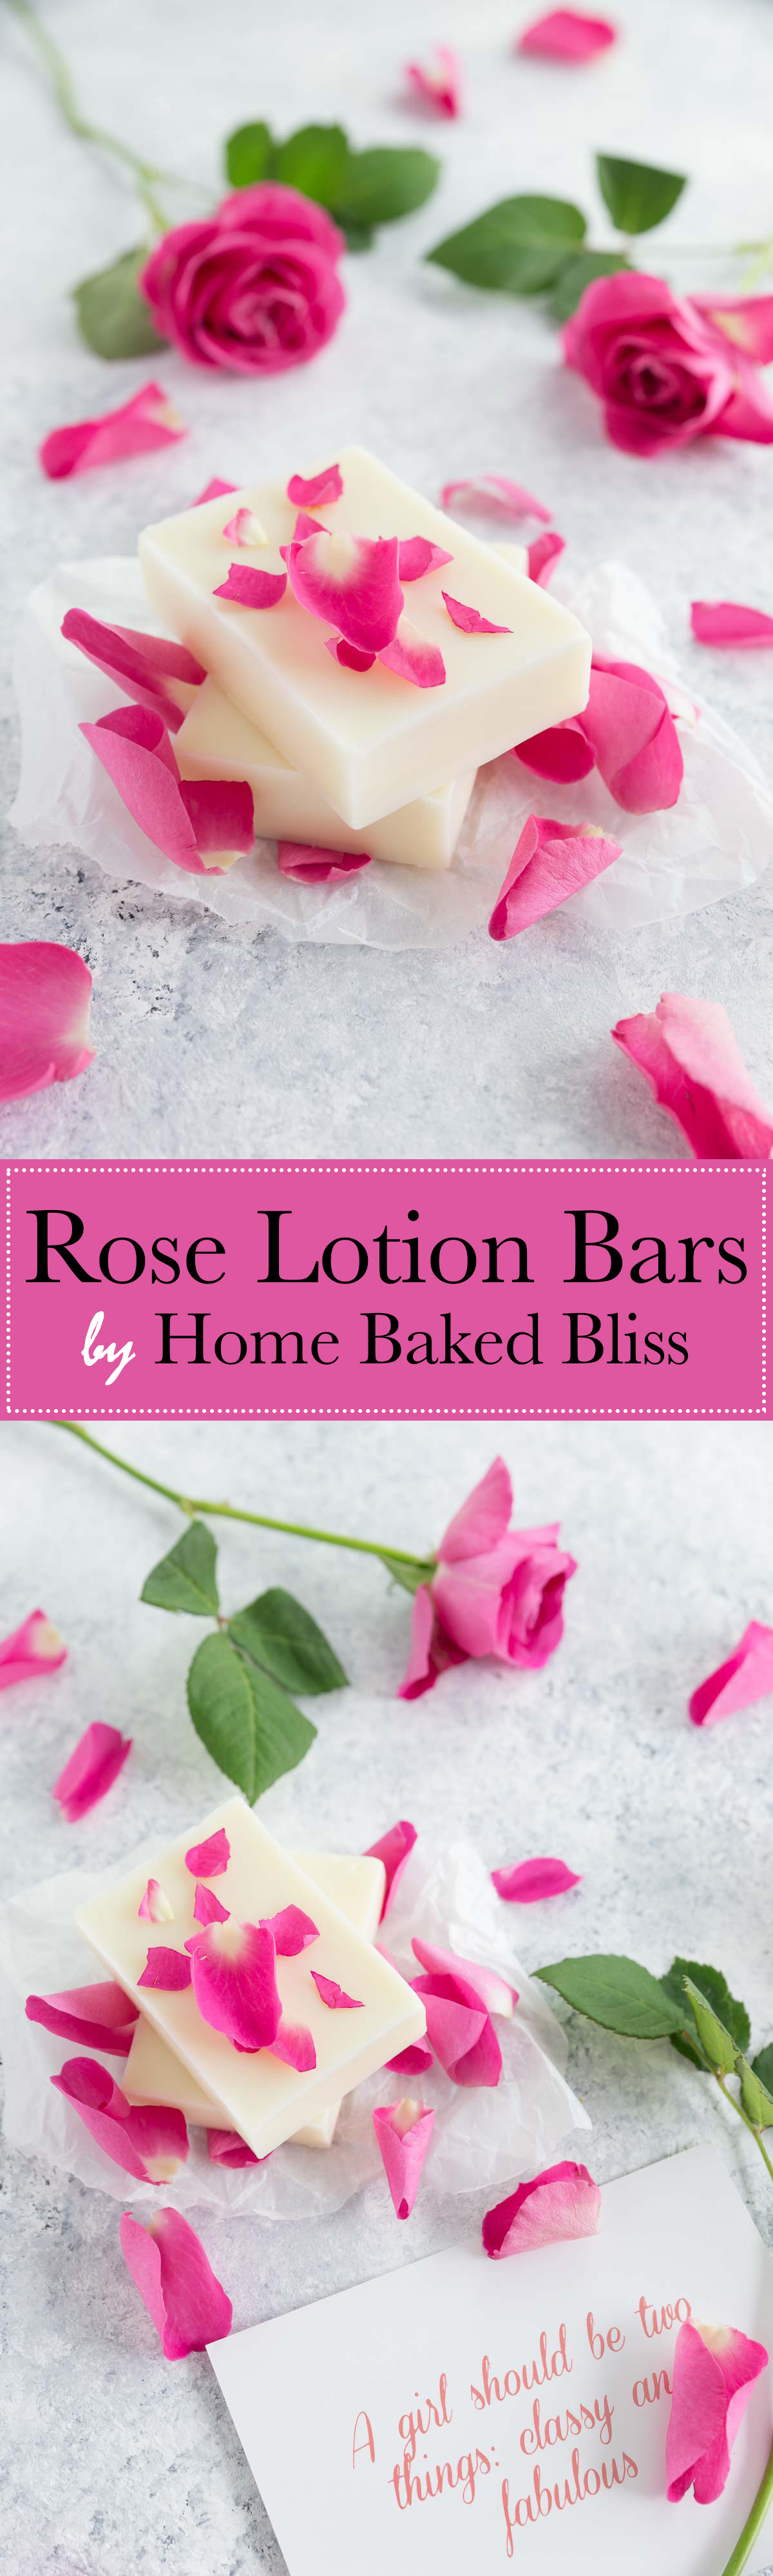 Rose Lotion Bars